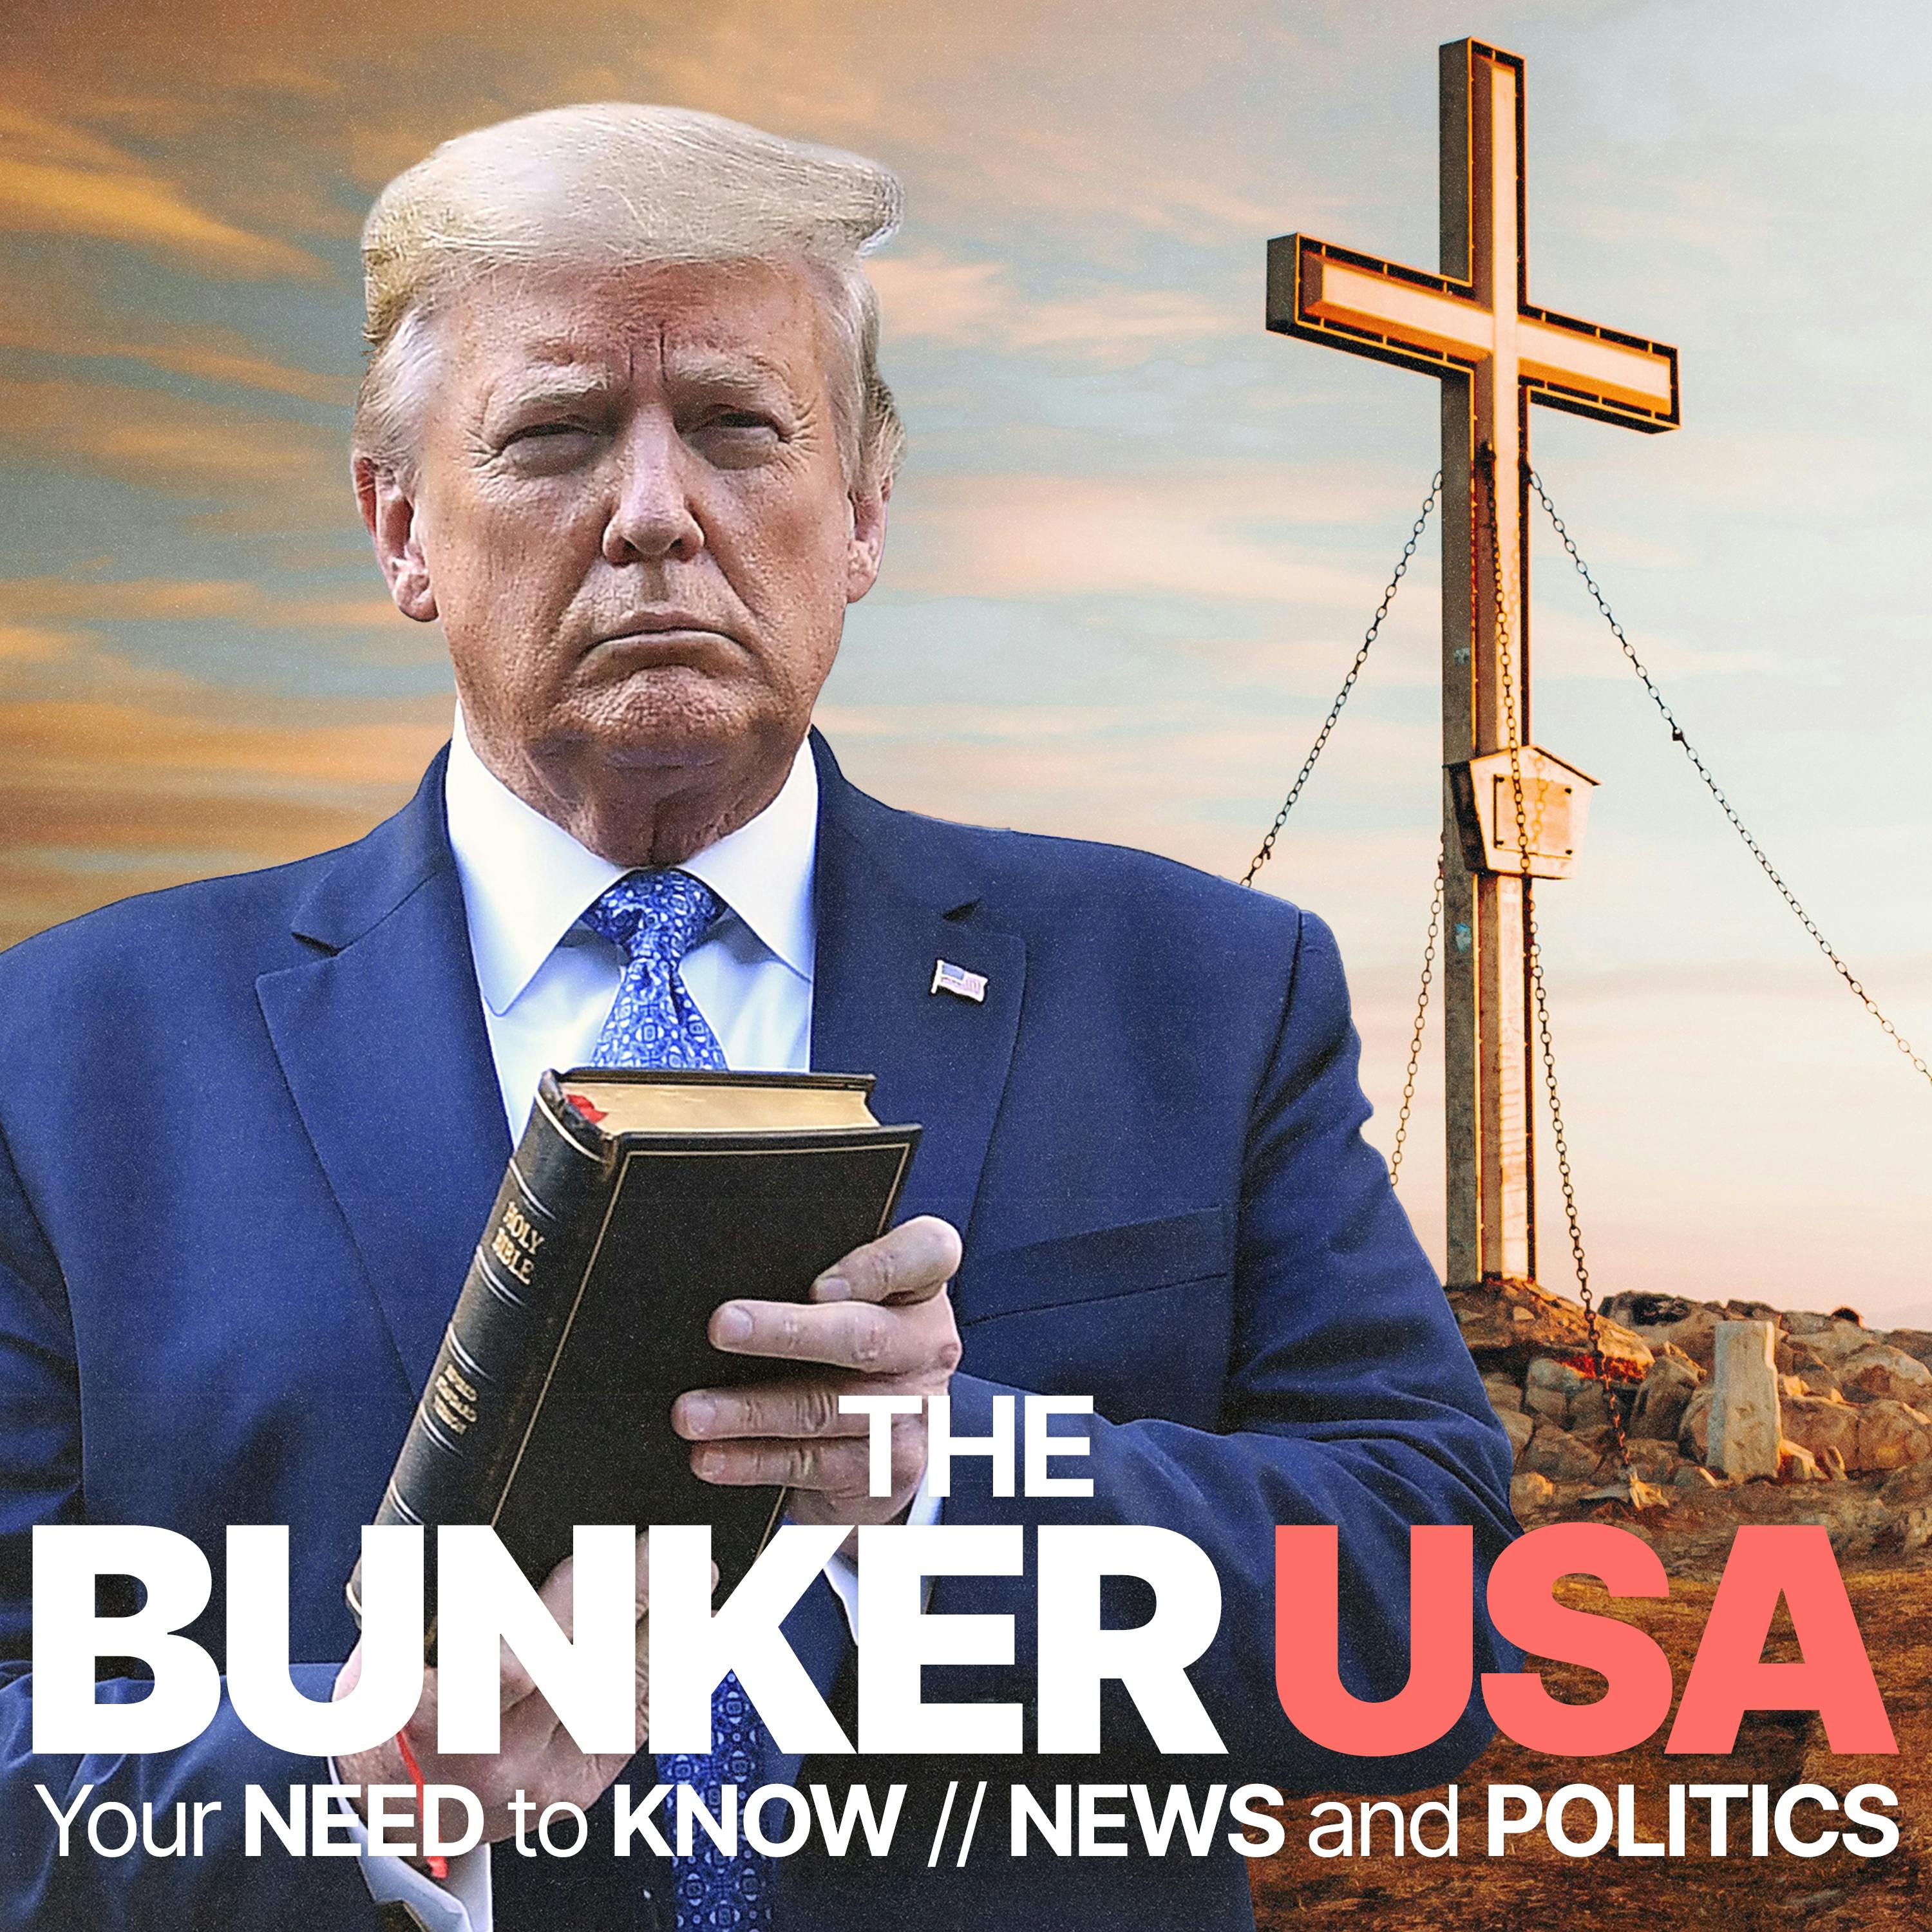 Can Jesus help Donald Trump win in 2024?